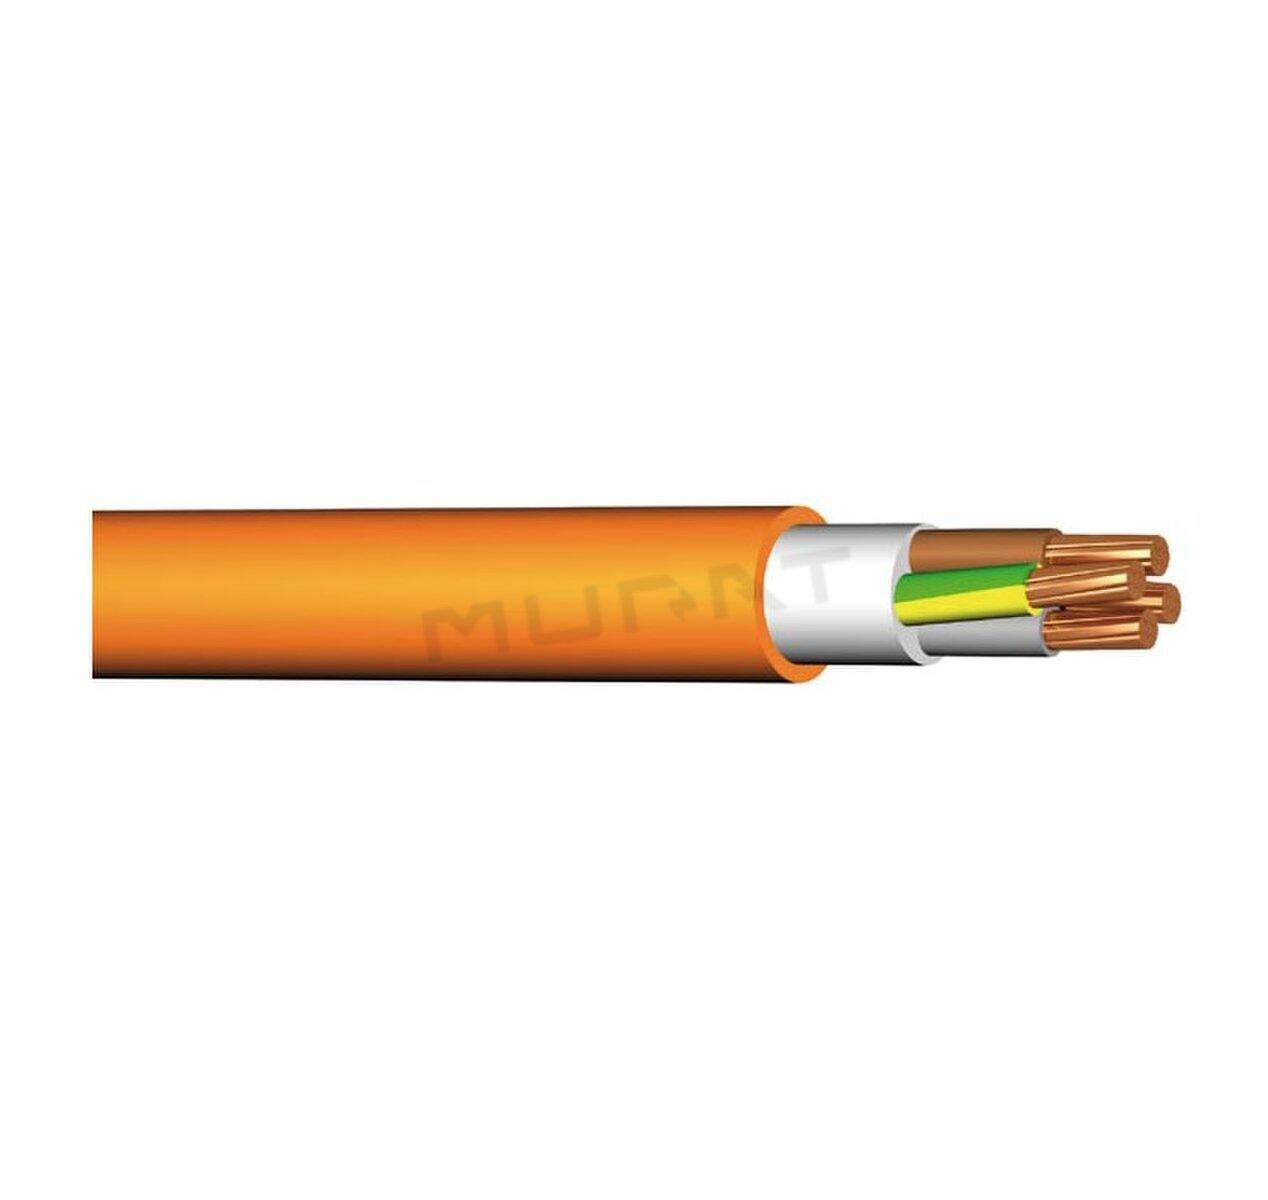 Kábel PRAFlaSafe X-J 4x50 mm2 SM B2ca s1d1a1